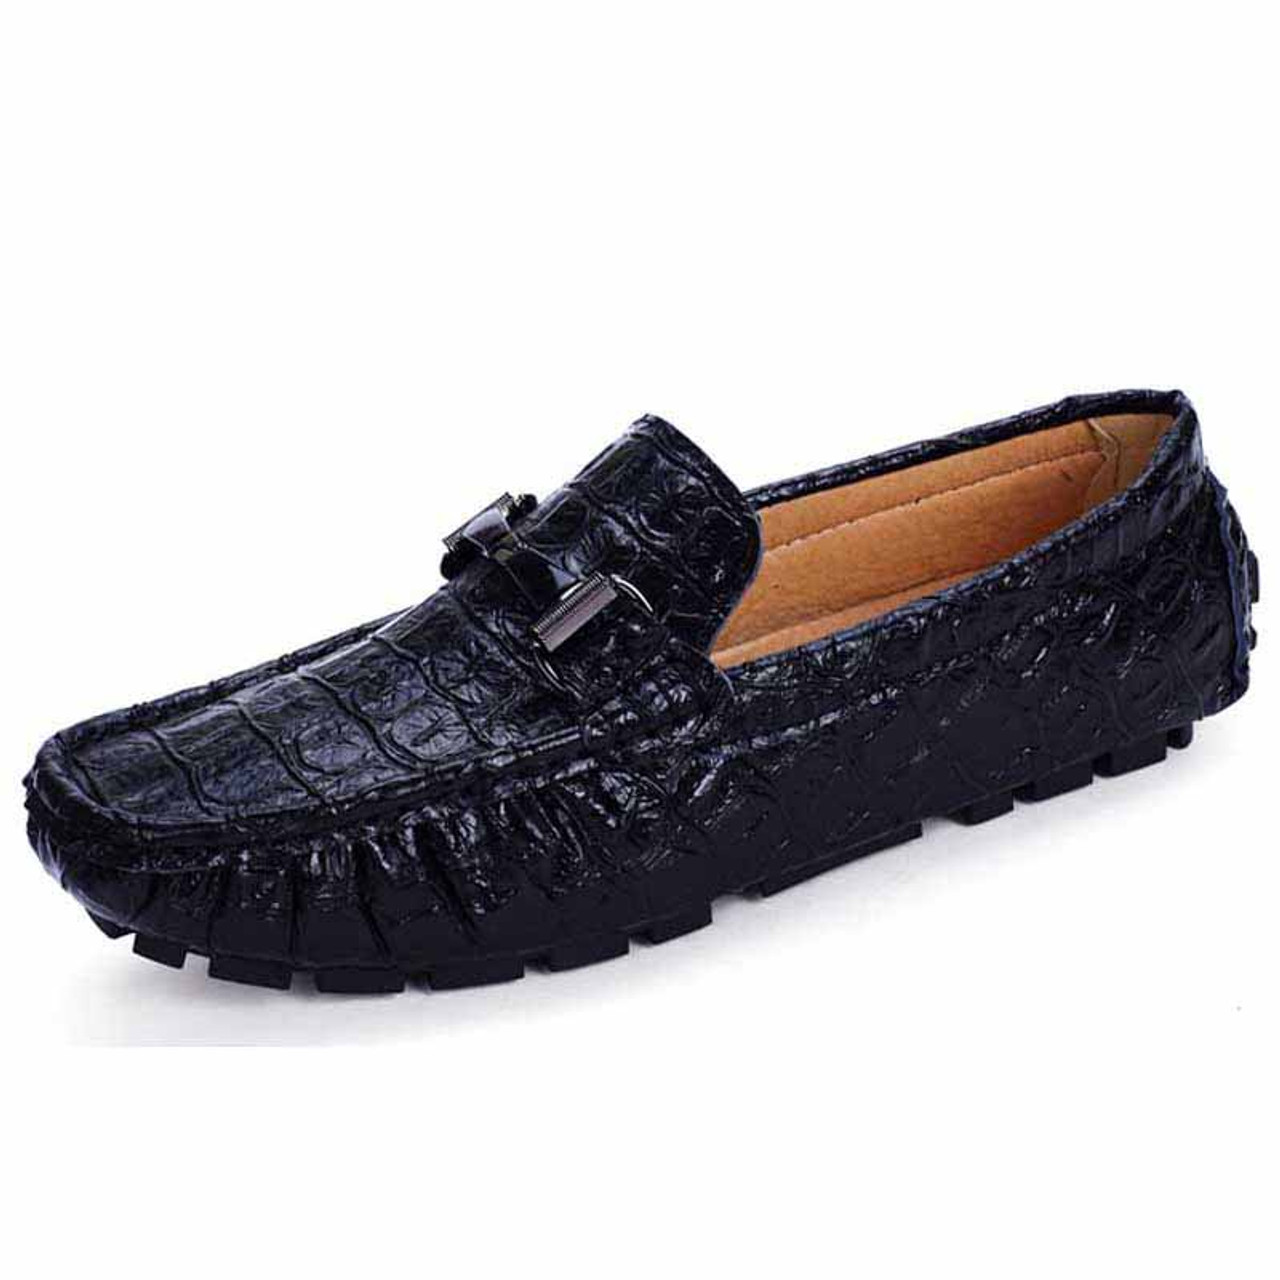 black crocodile loafers